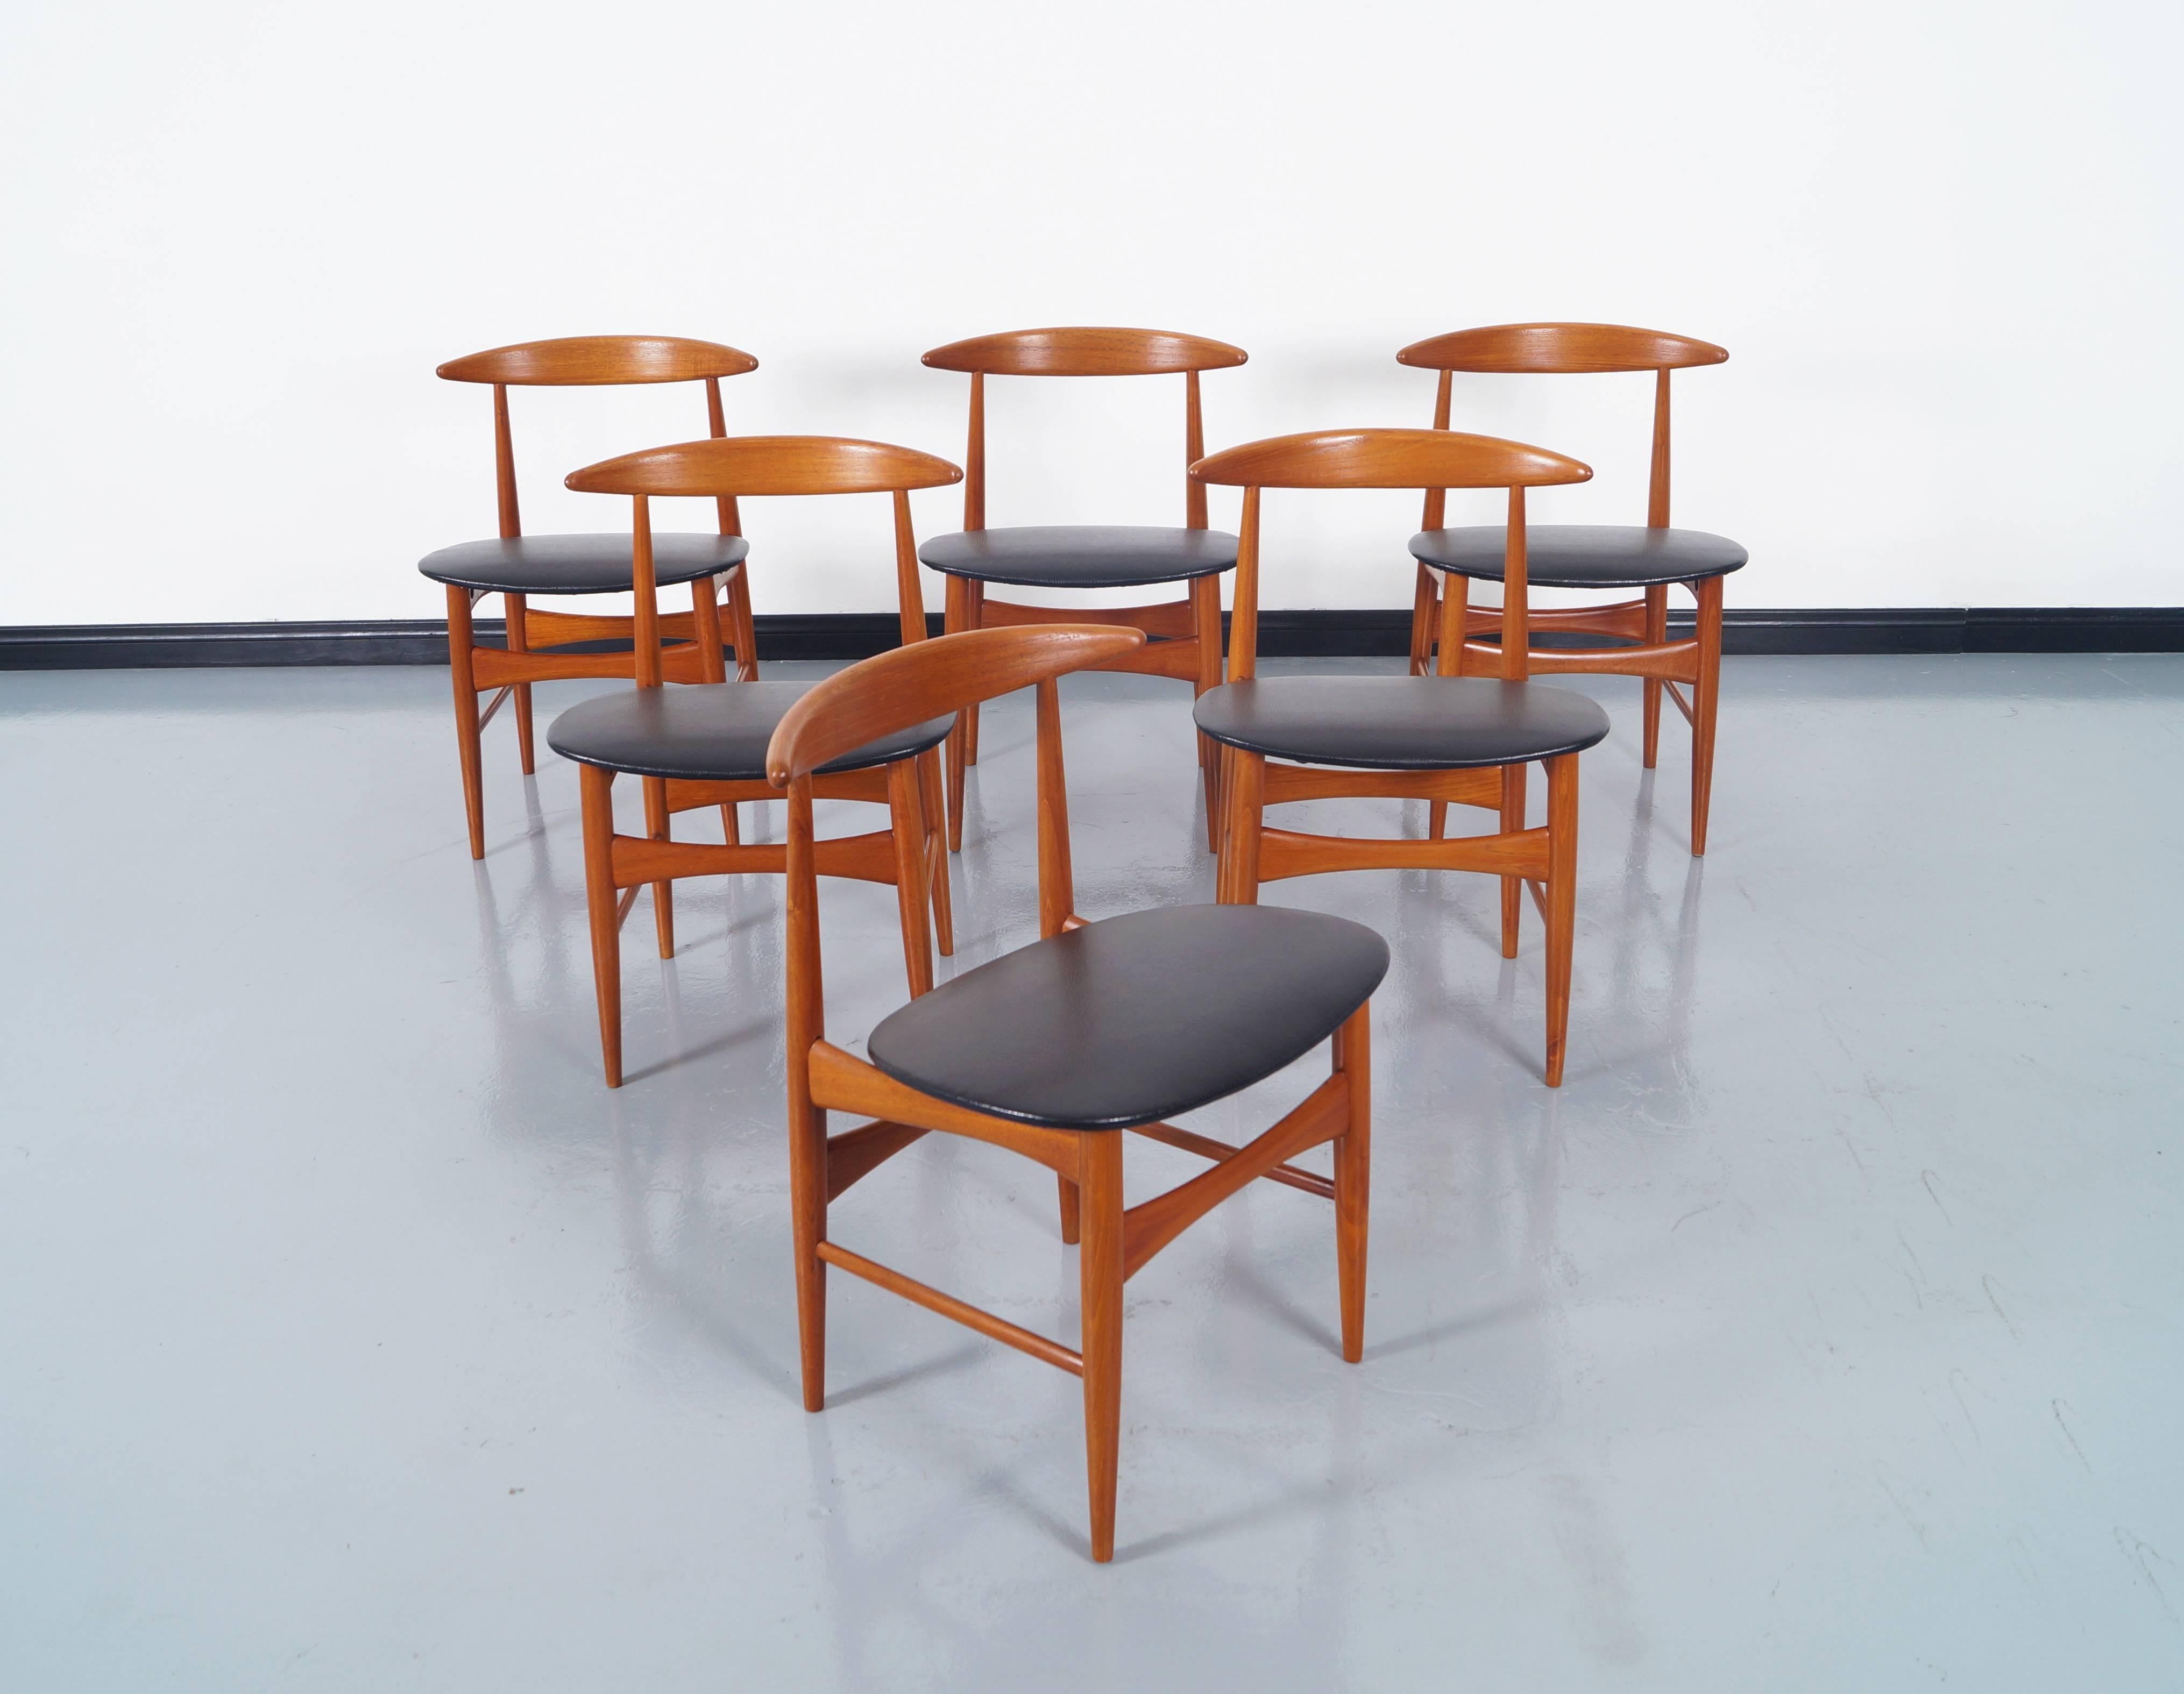 An amazing set of six Danish Modern teak dining chairs manufactured by Mogens Kold Møbelfabrik in Denmark, circa 1960s.